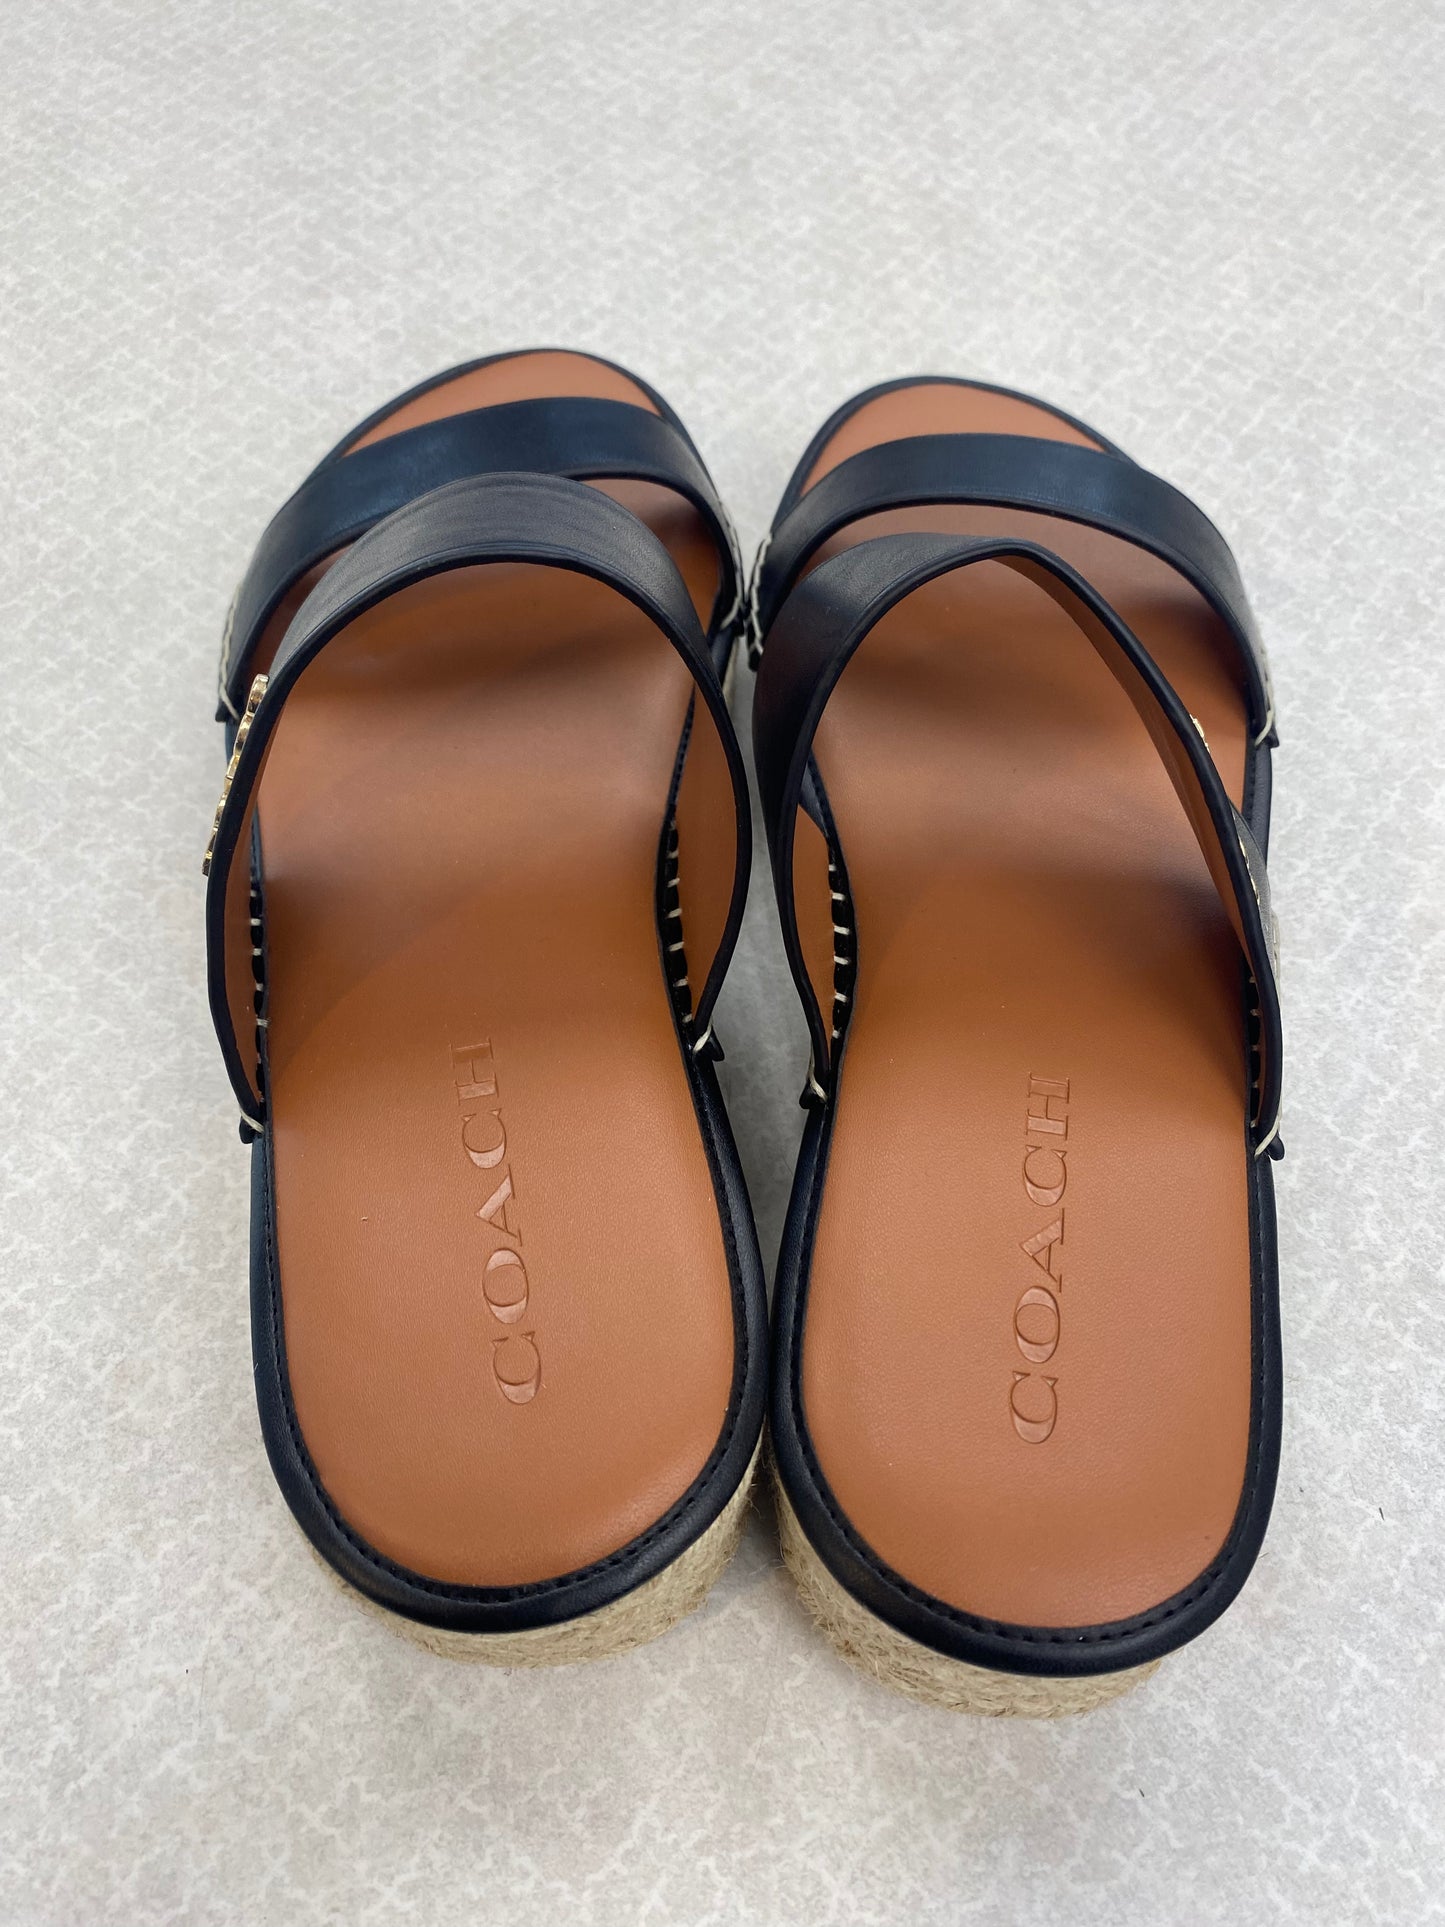 Sandals Designer By Coach  Size: 6.5